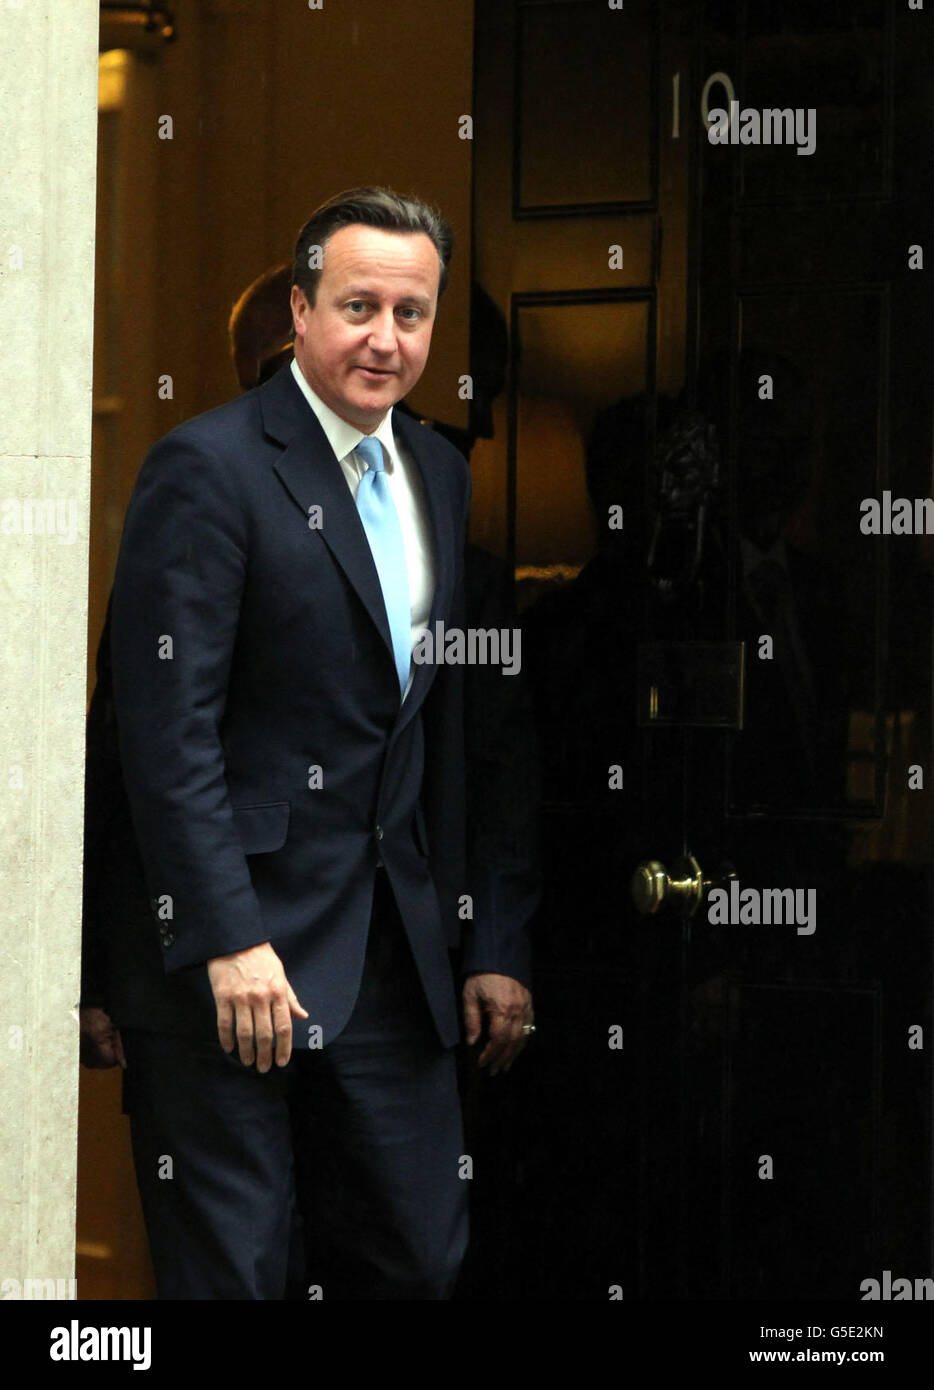 Prime Minister David Cameron arrives to greet Yemeni President Abdrabuh Mansur Hadi (not pictured) in Downing Street, London. Stock Photo